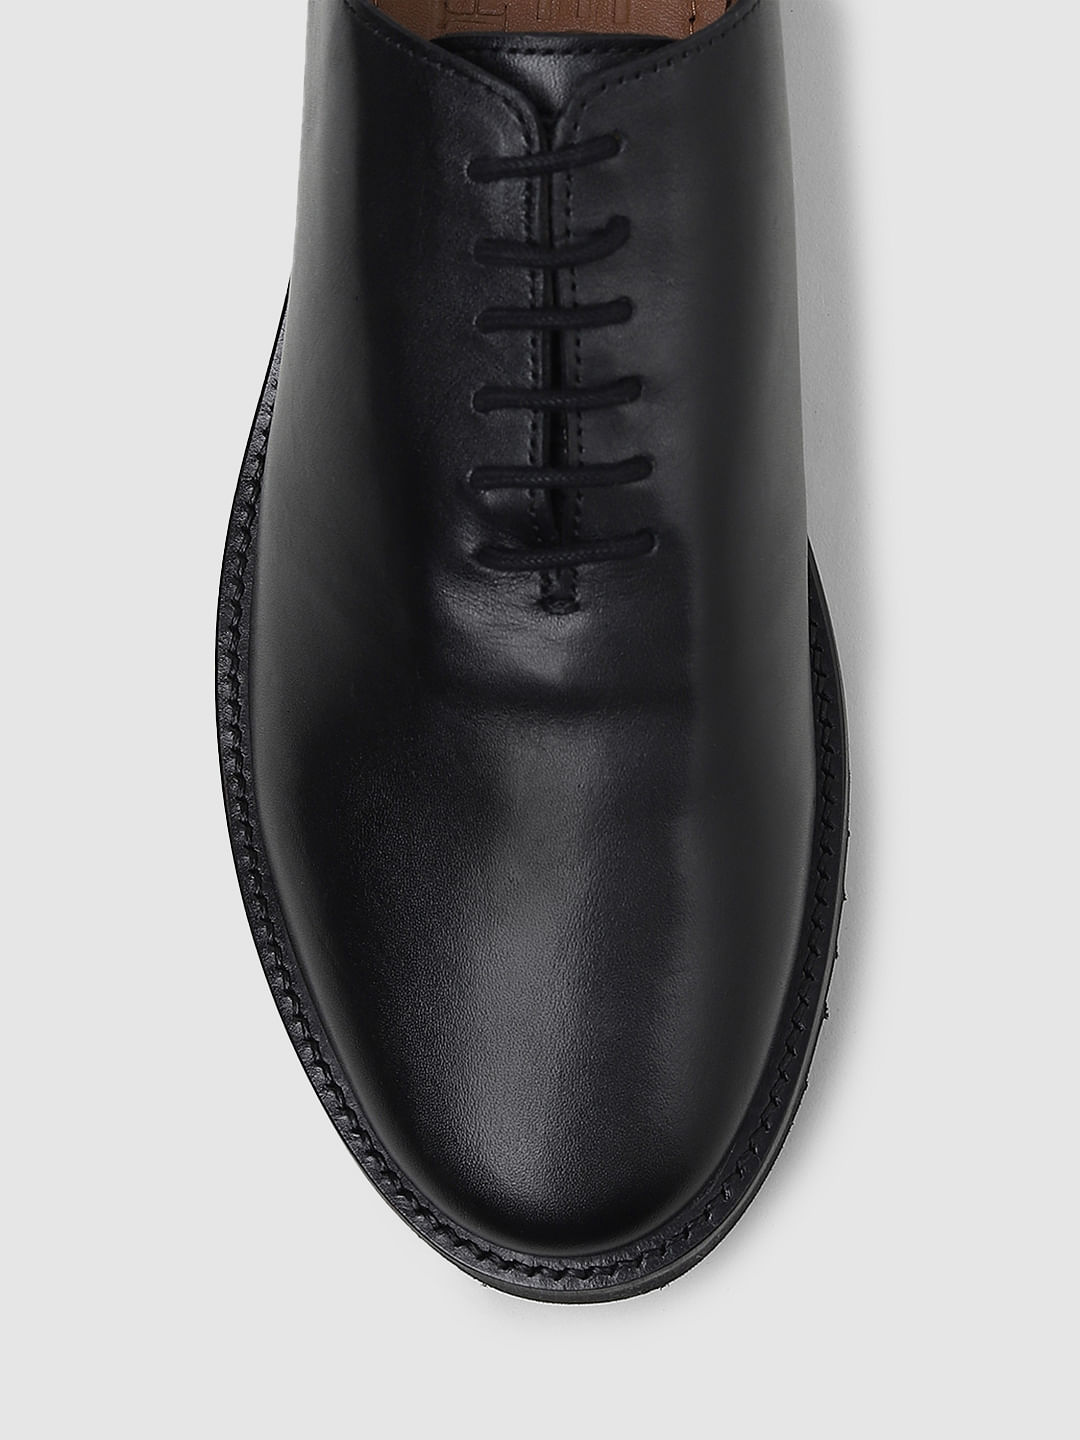 Wholecut | English Men's Shoes & Boots | Loake Shoemakers